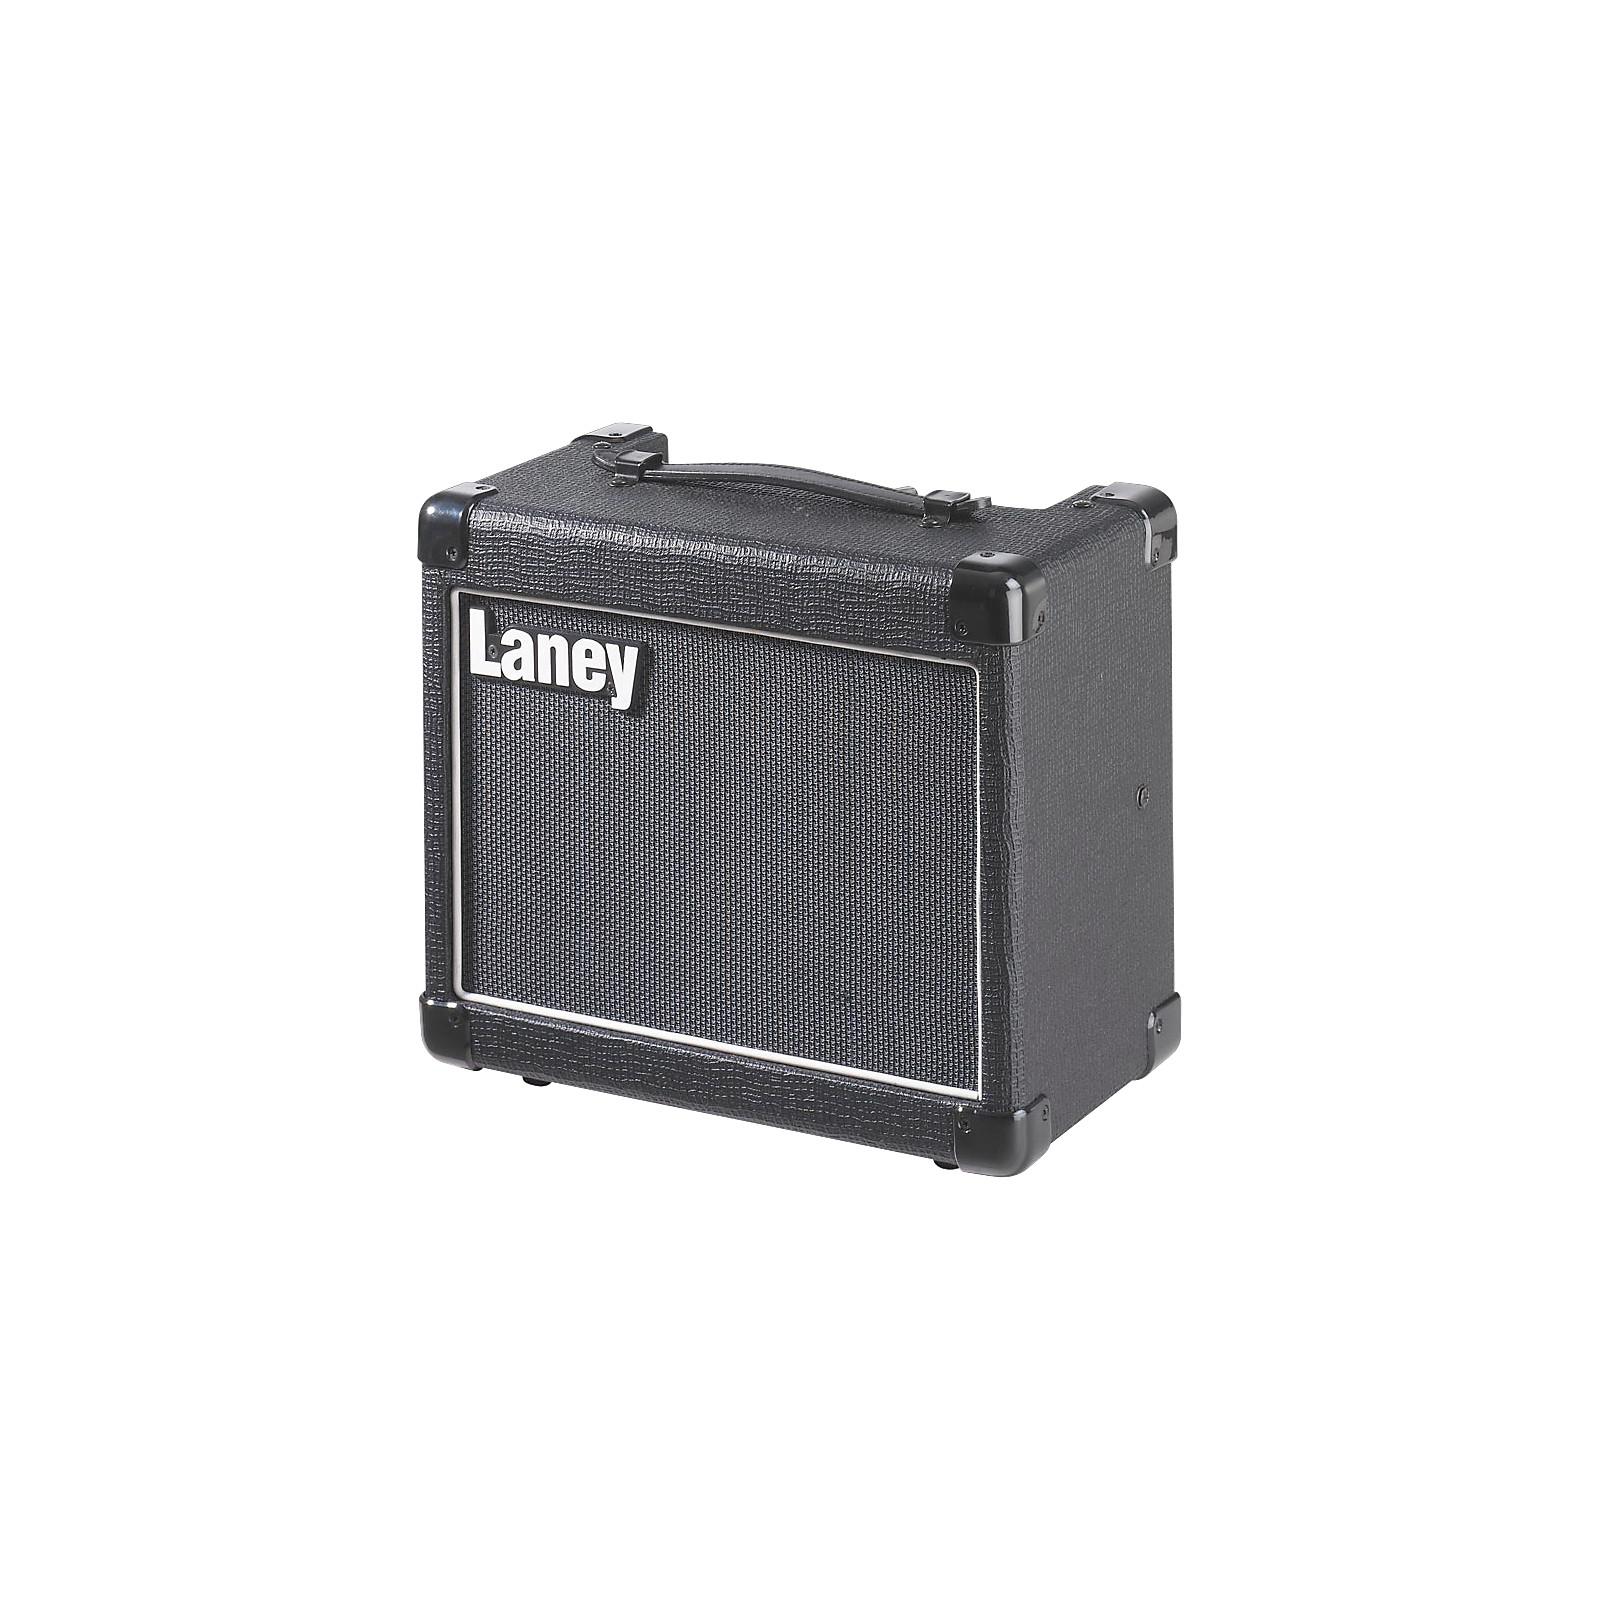 Laney - Combo Guitarra Electrica Vintage, 10 W 1 x 6.5 Mod.LG12_103